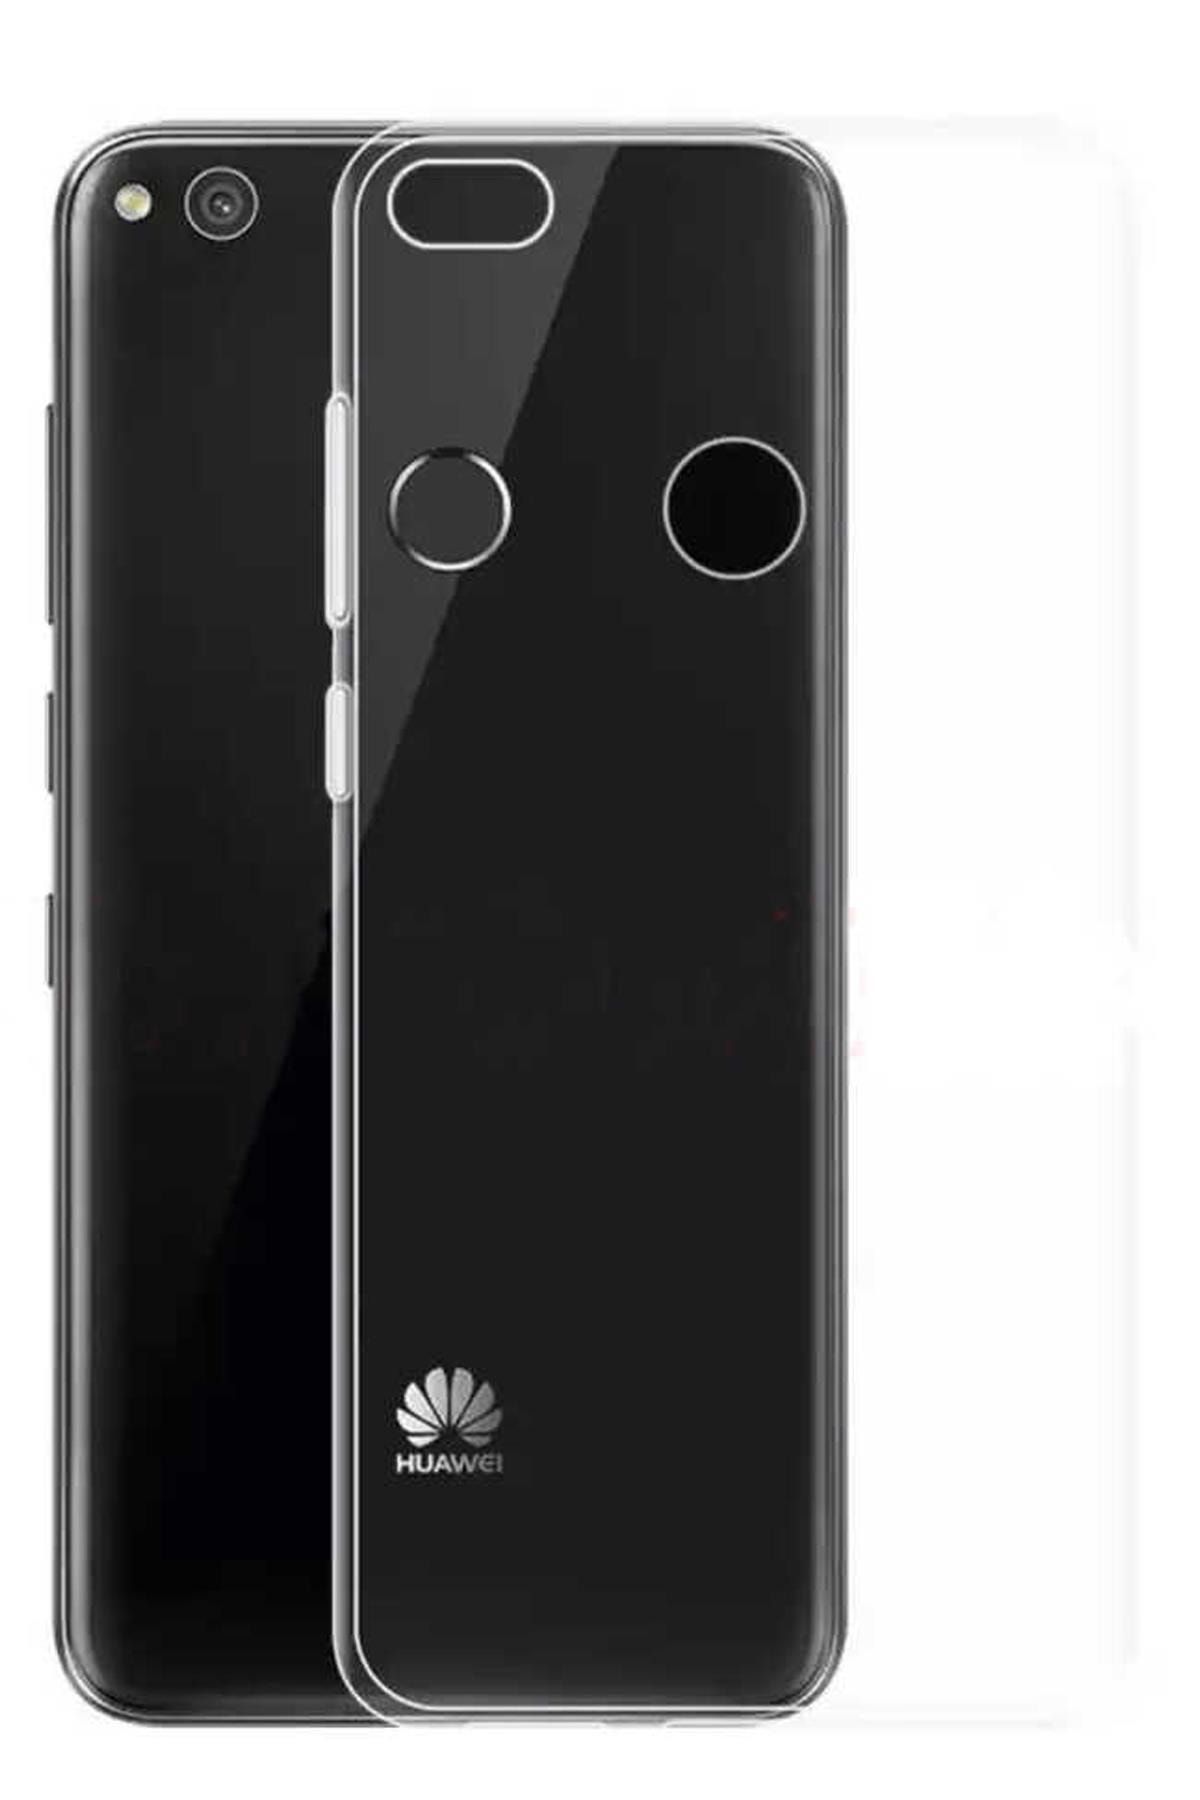 Elfia Huawei P8 Lite Kılıf Şeffaf Silikon Süper